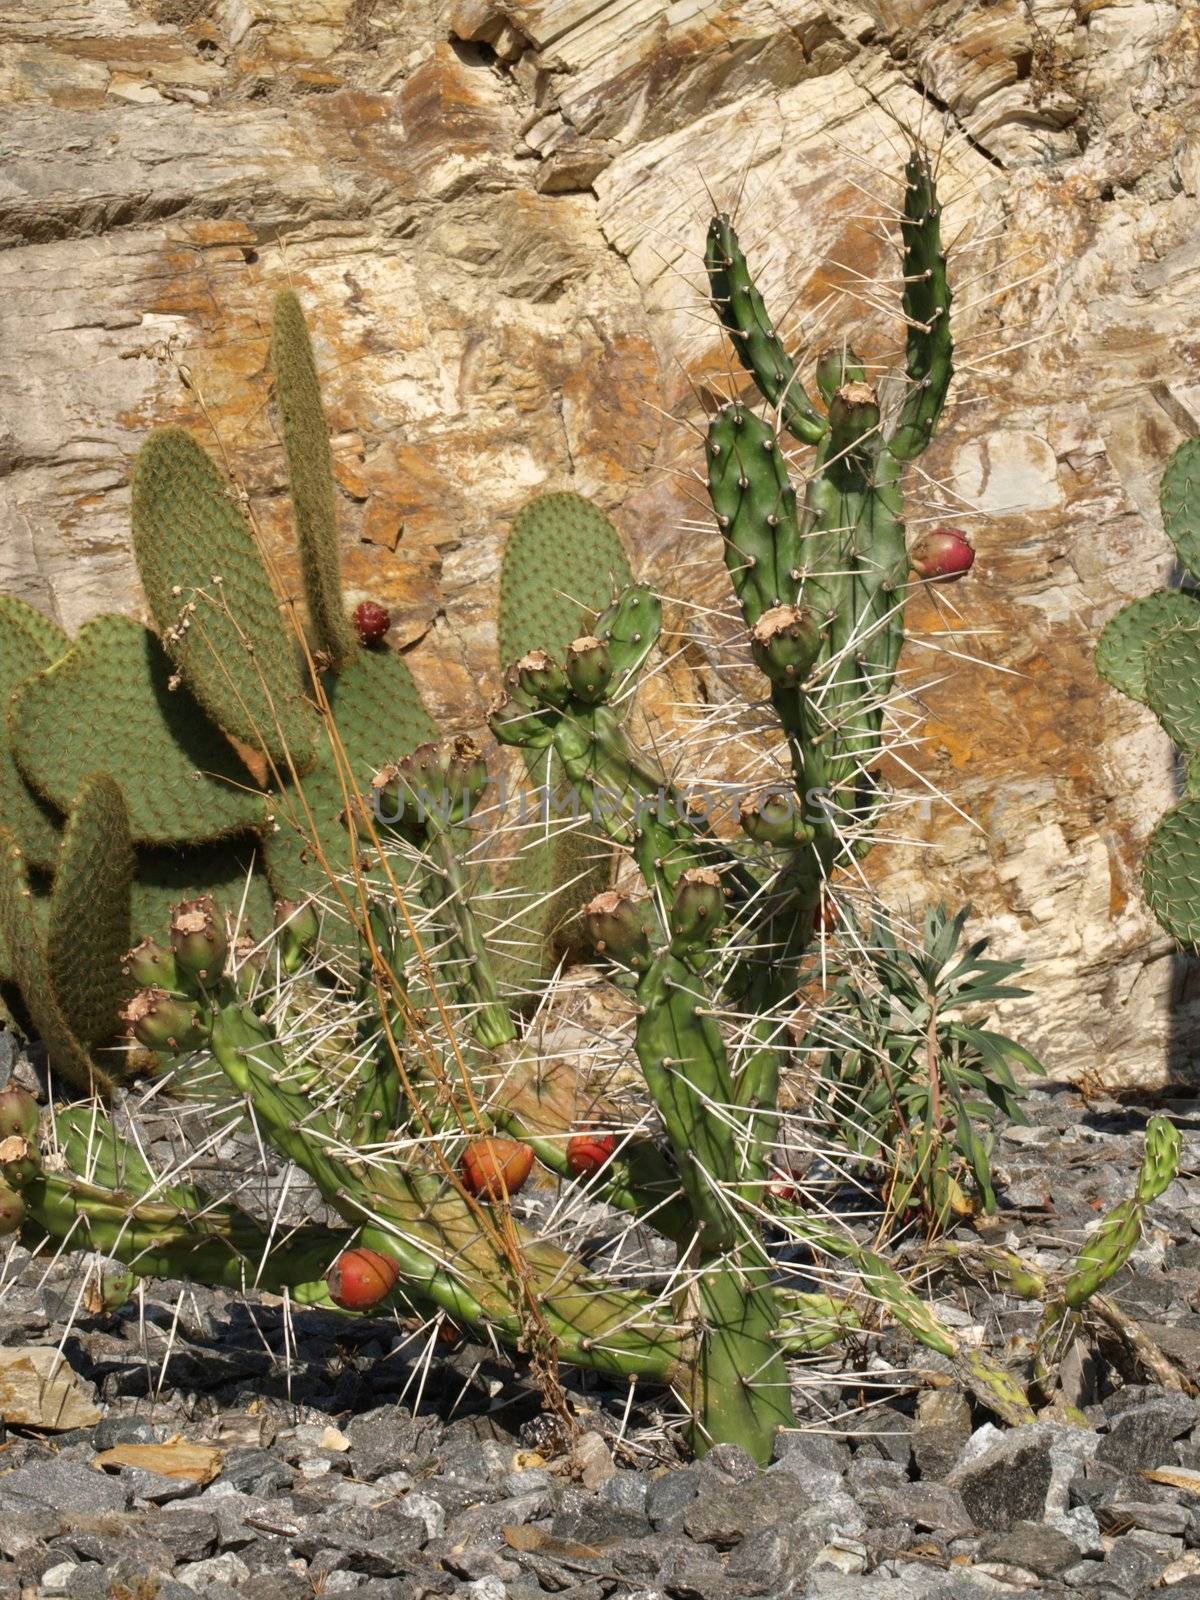 image of a cactus Opuntia ficus-indica in a garden